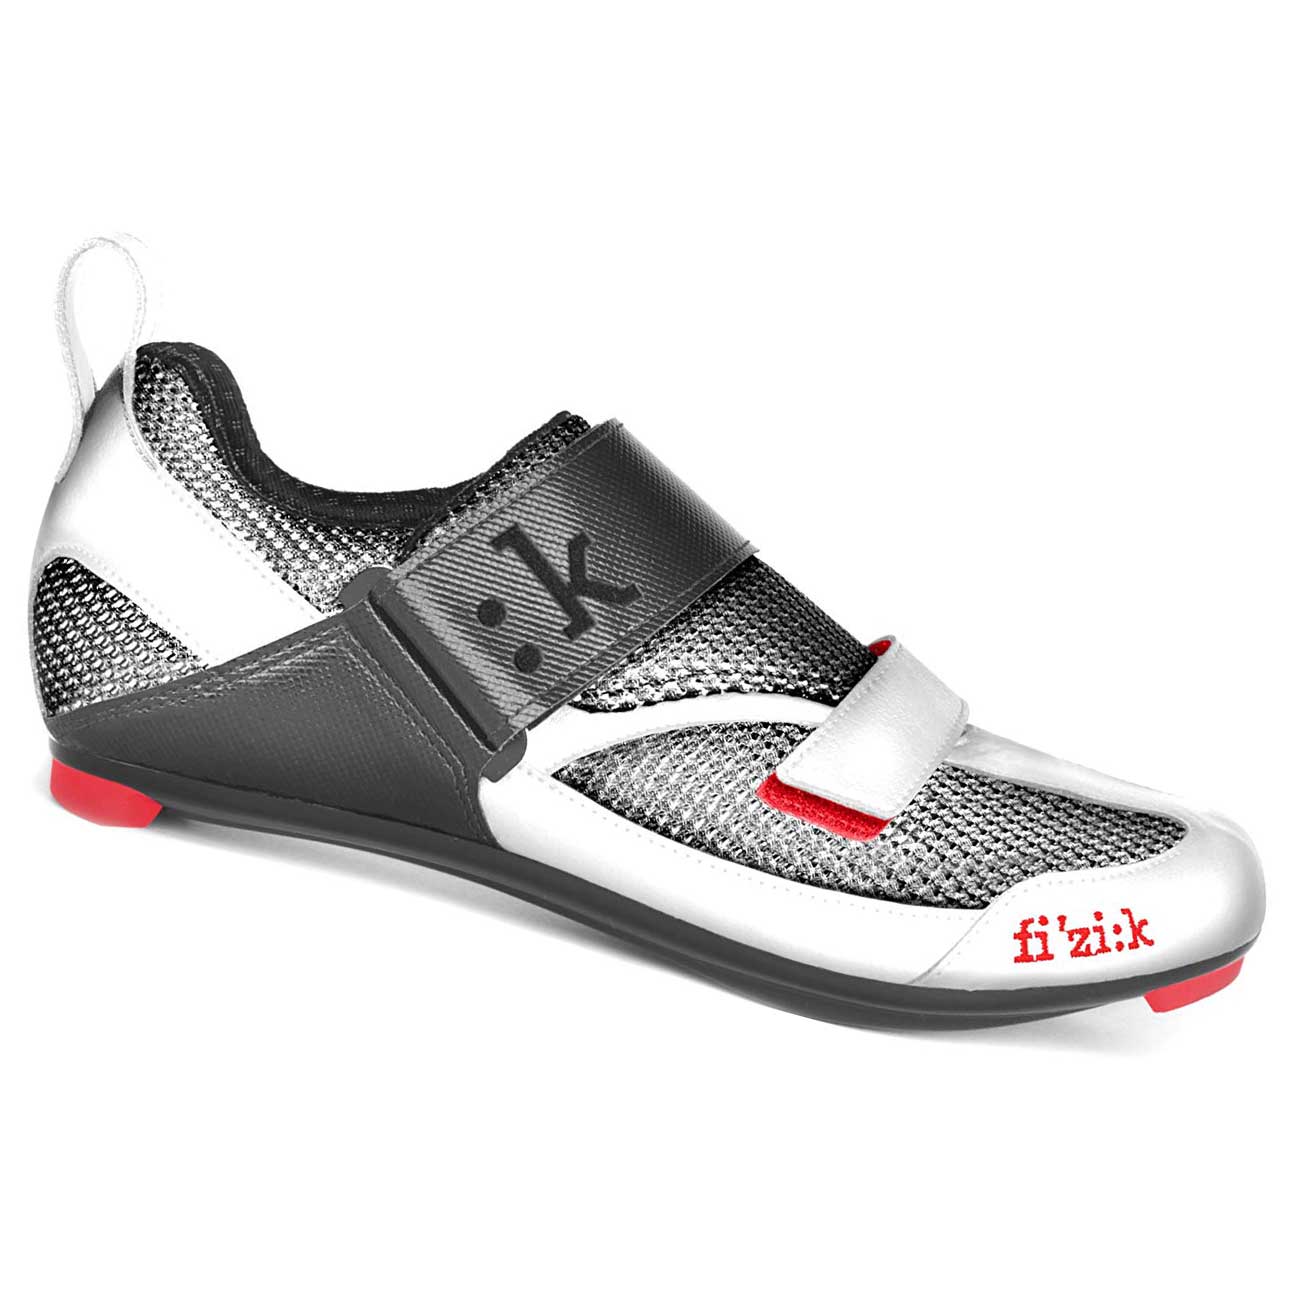 fizik triathlon shoes